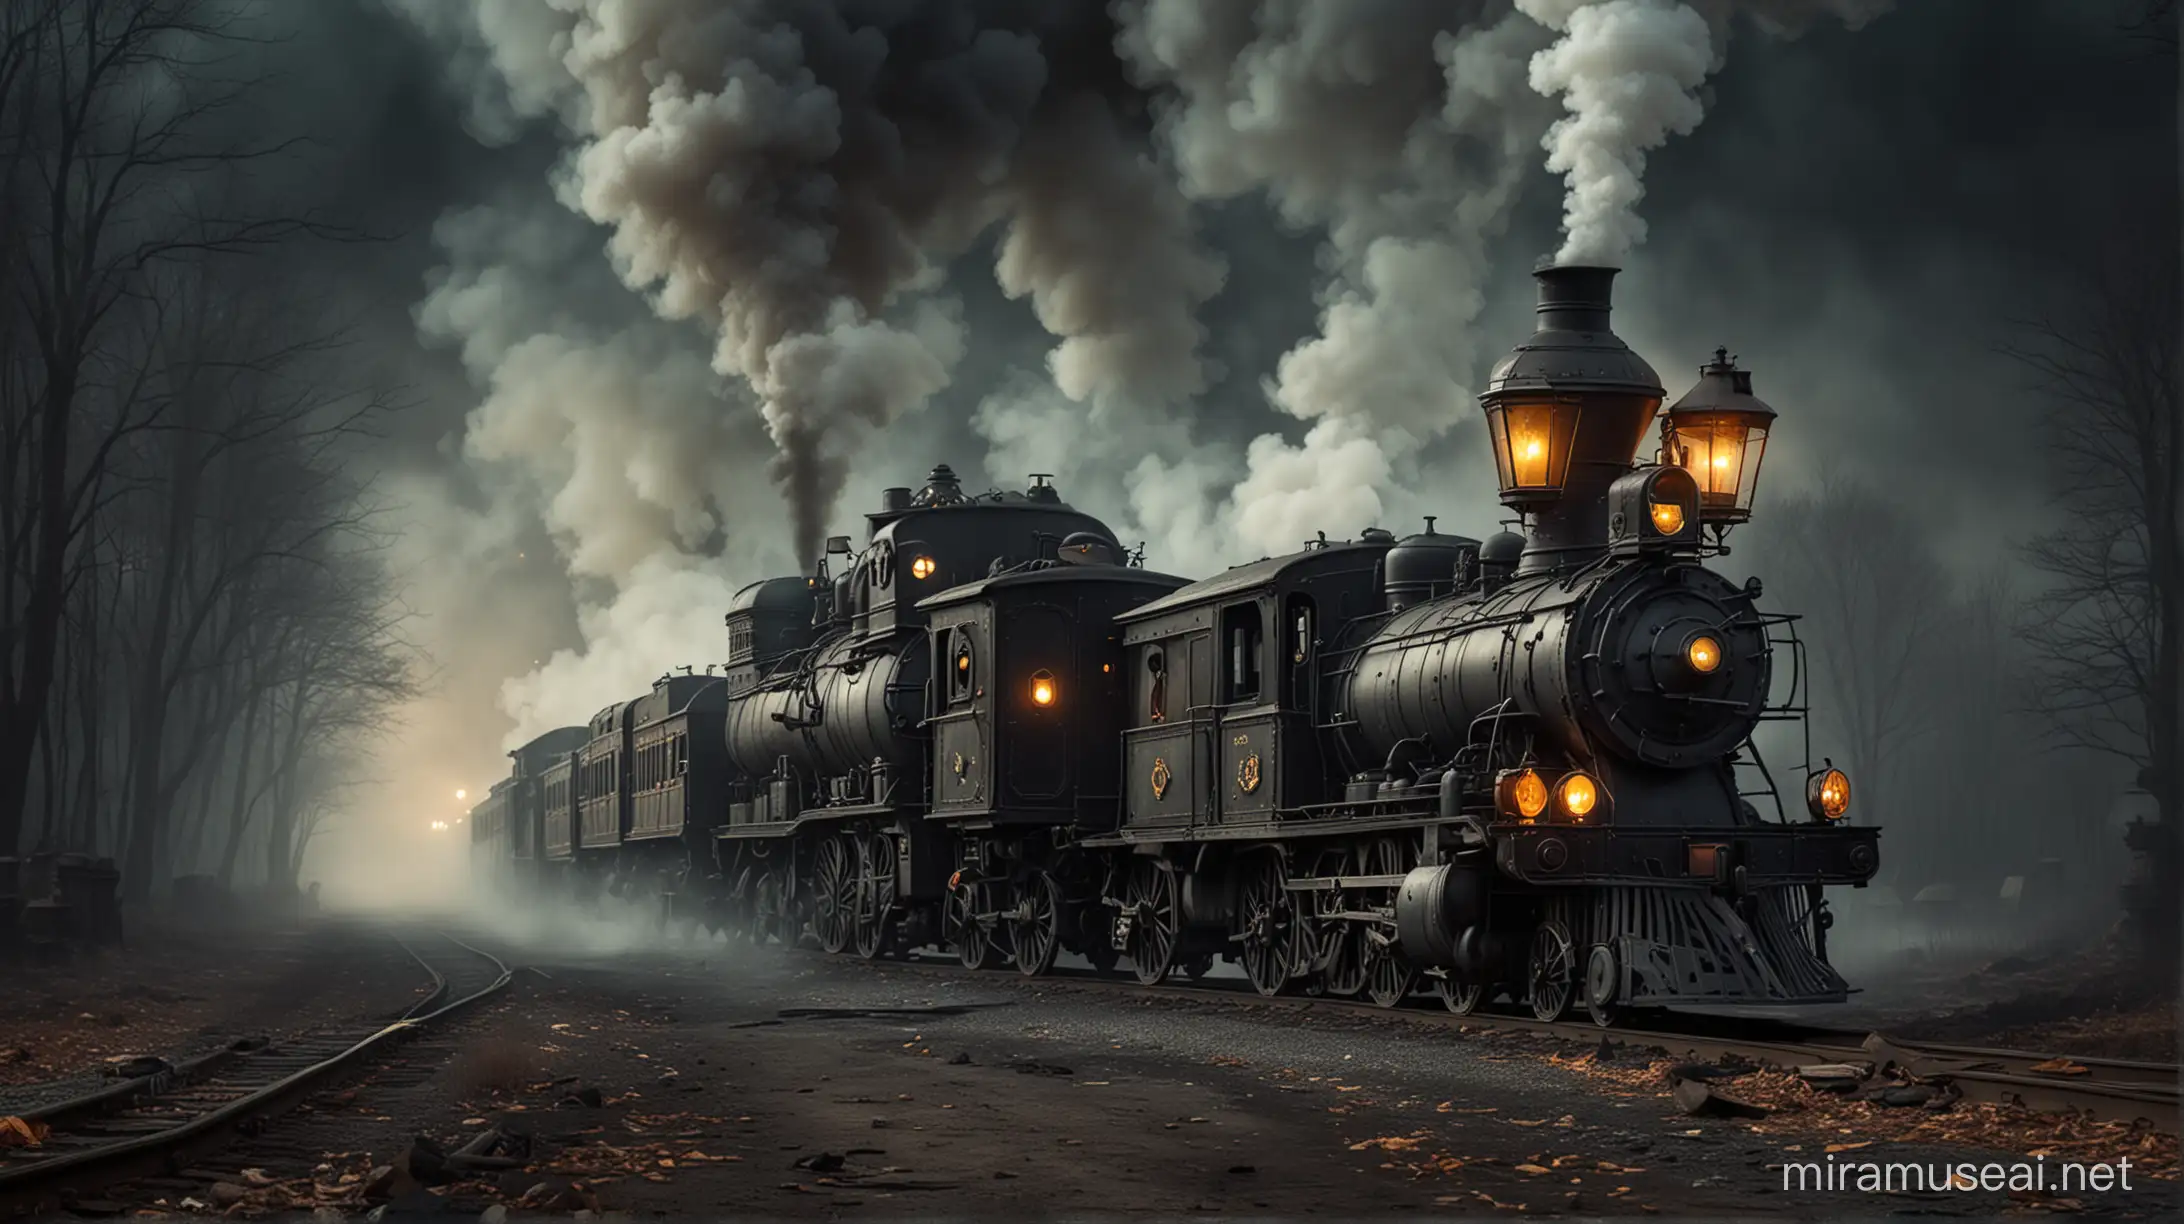 Eerie Steampunk Halloween Train Amidst Creepy Atmosphere and Smoke